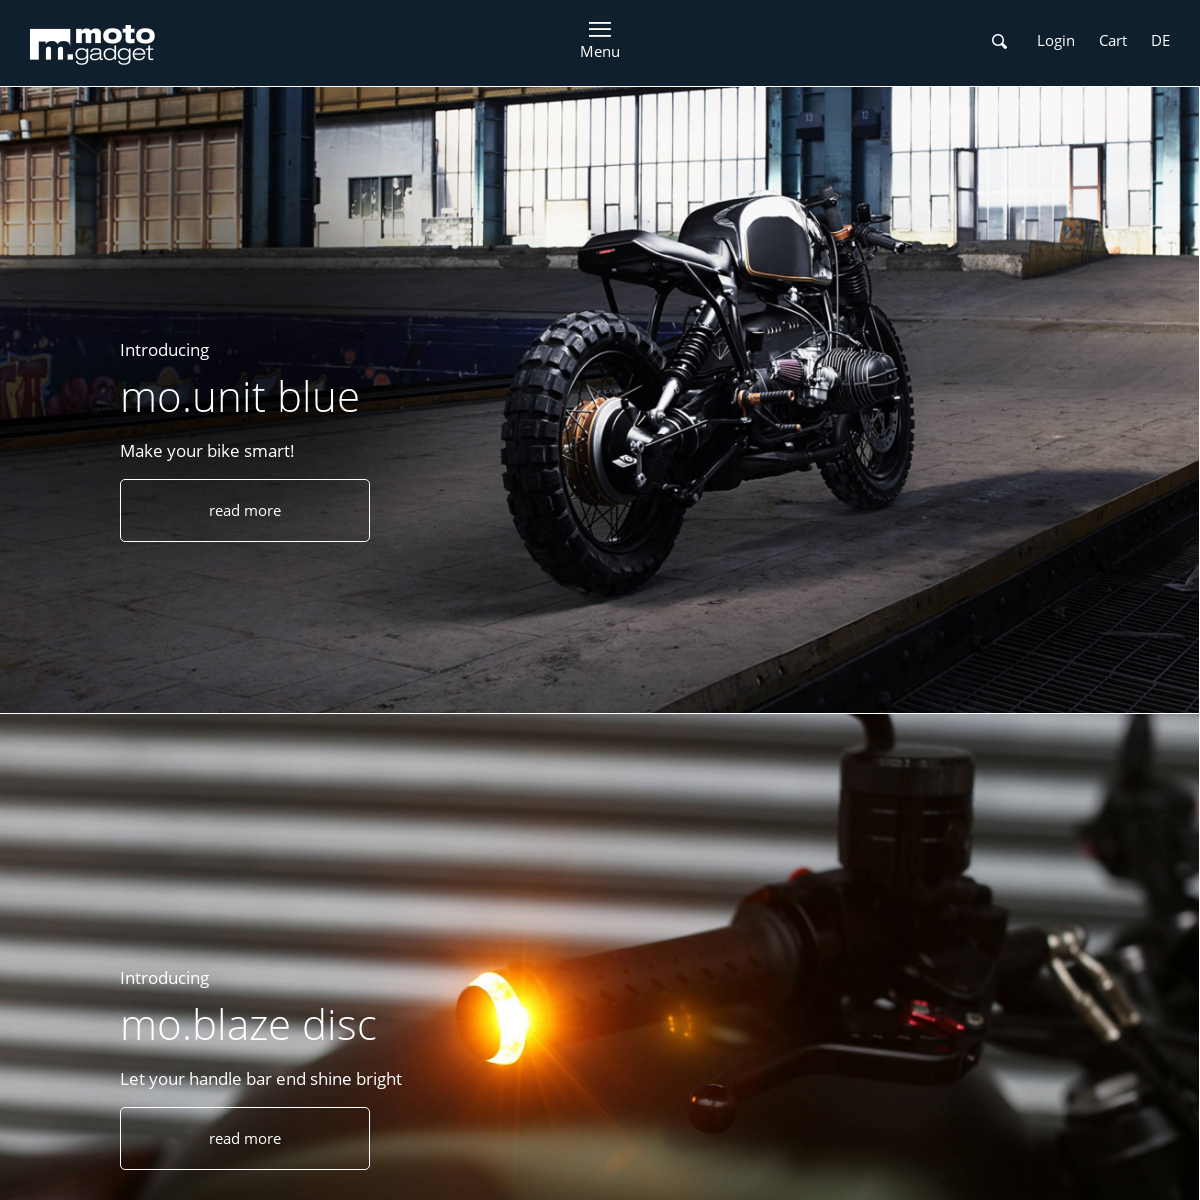 A complete backup of motogadget.com